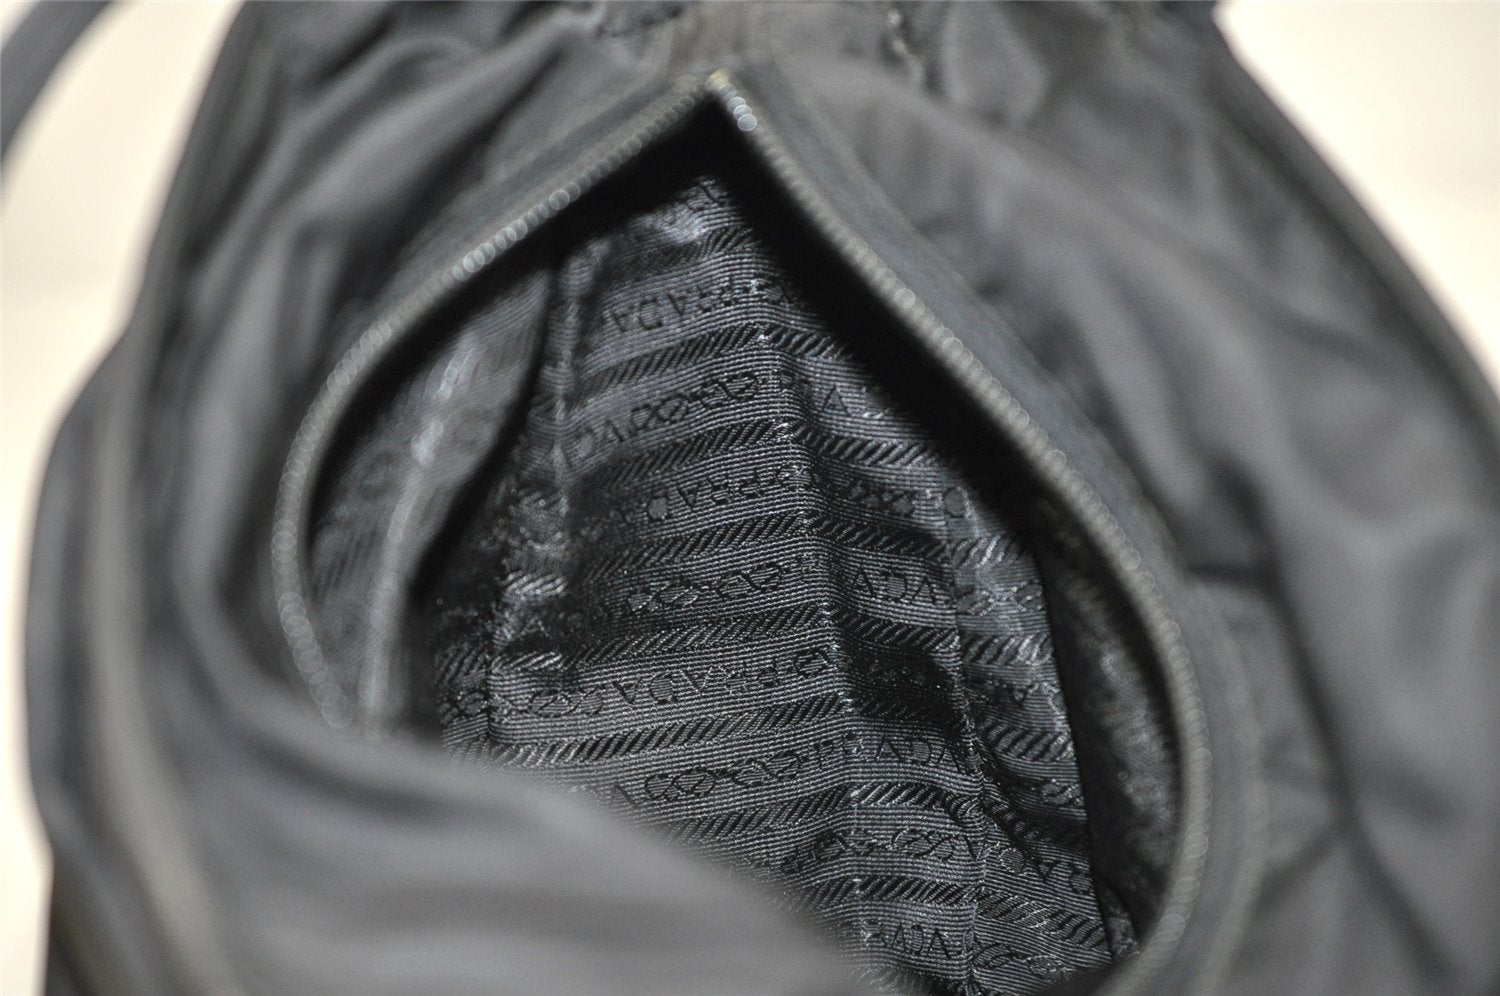 Authentic PRADA Vintage Nylon Tessuto Tote Hand Bag Black 0382K